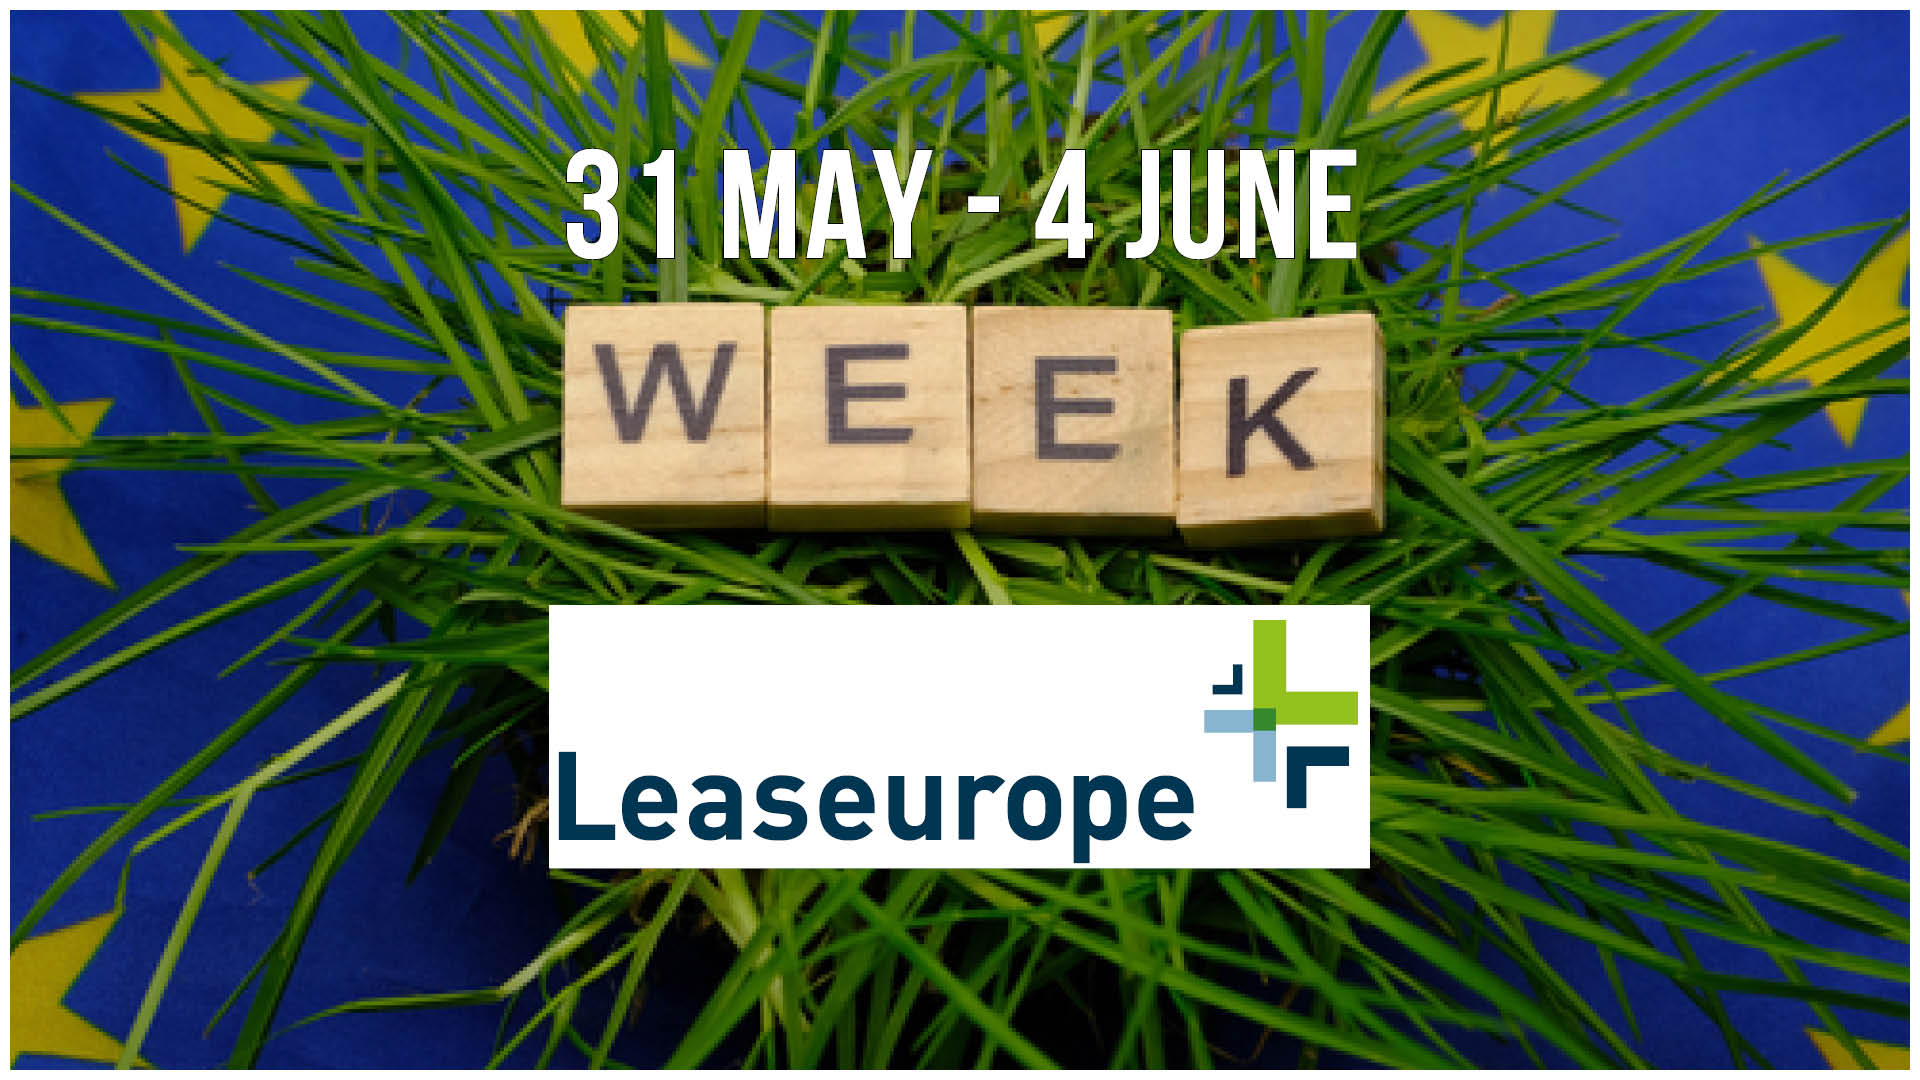 Leaseurope puts spotlight on zero pollution for EU Green Week